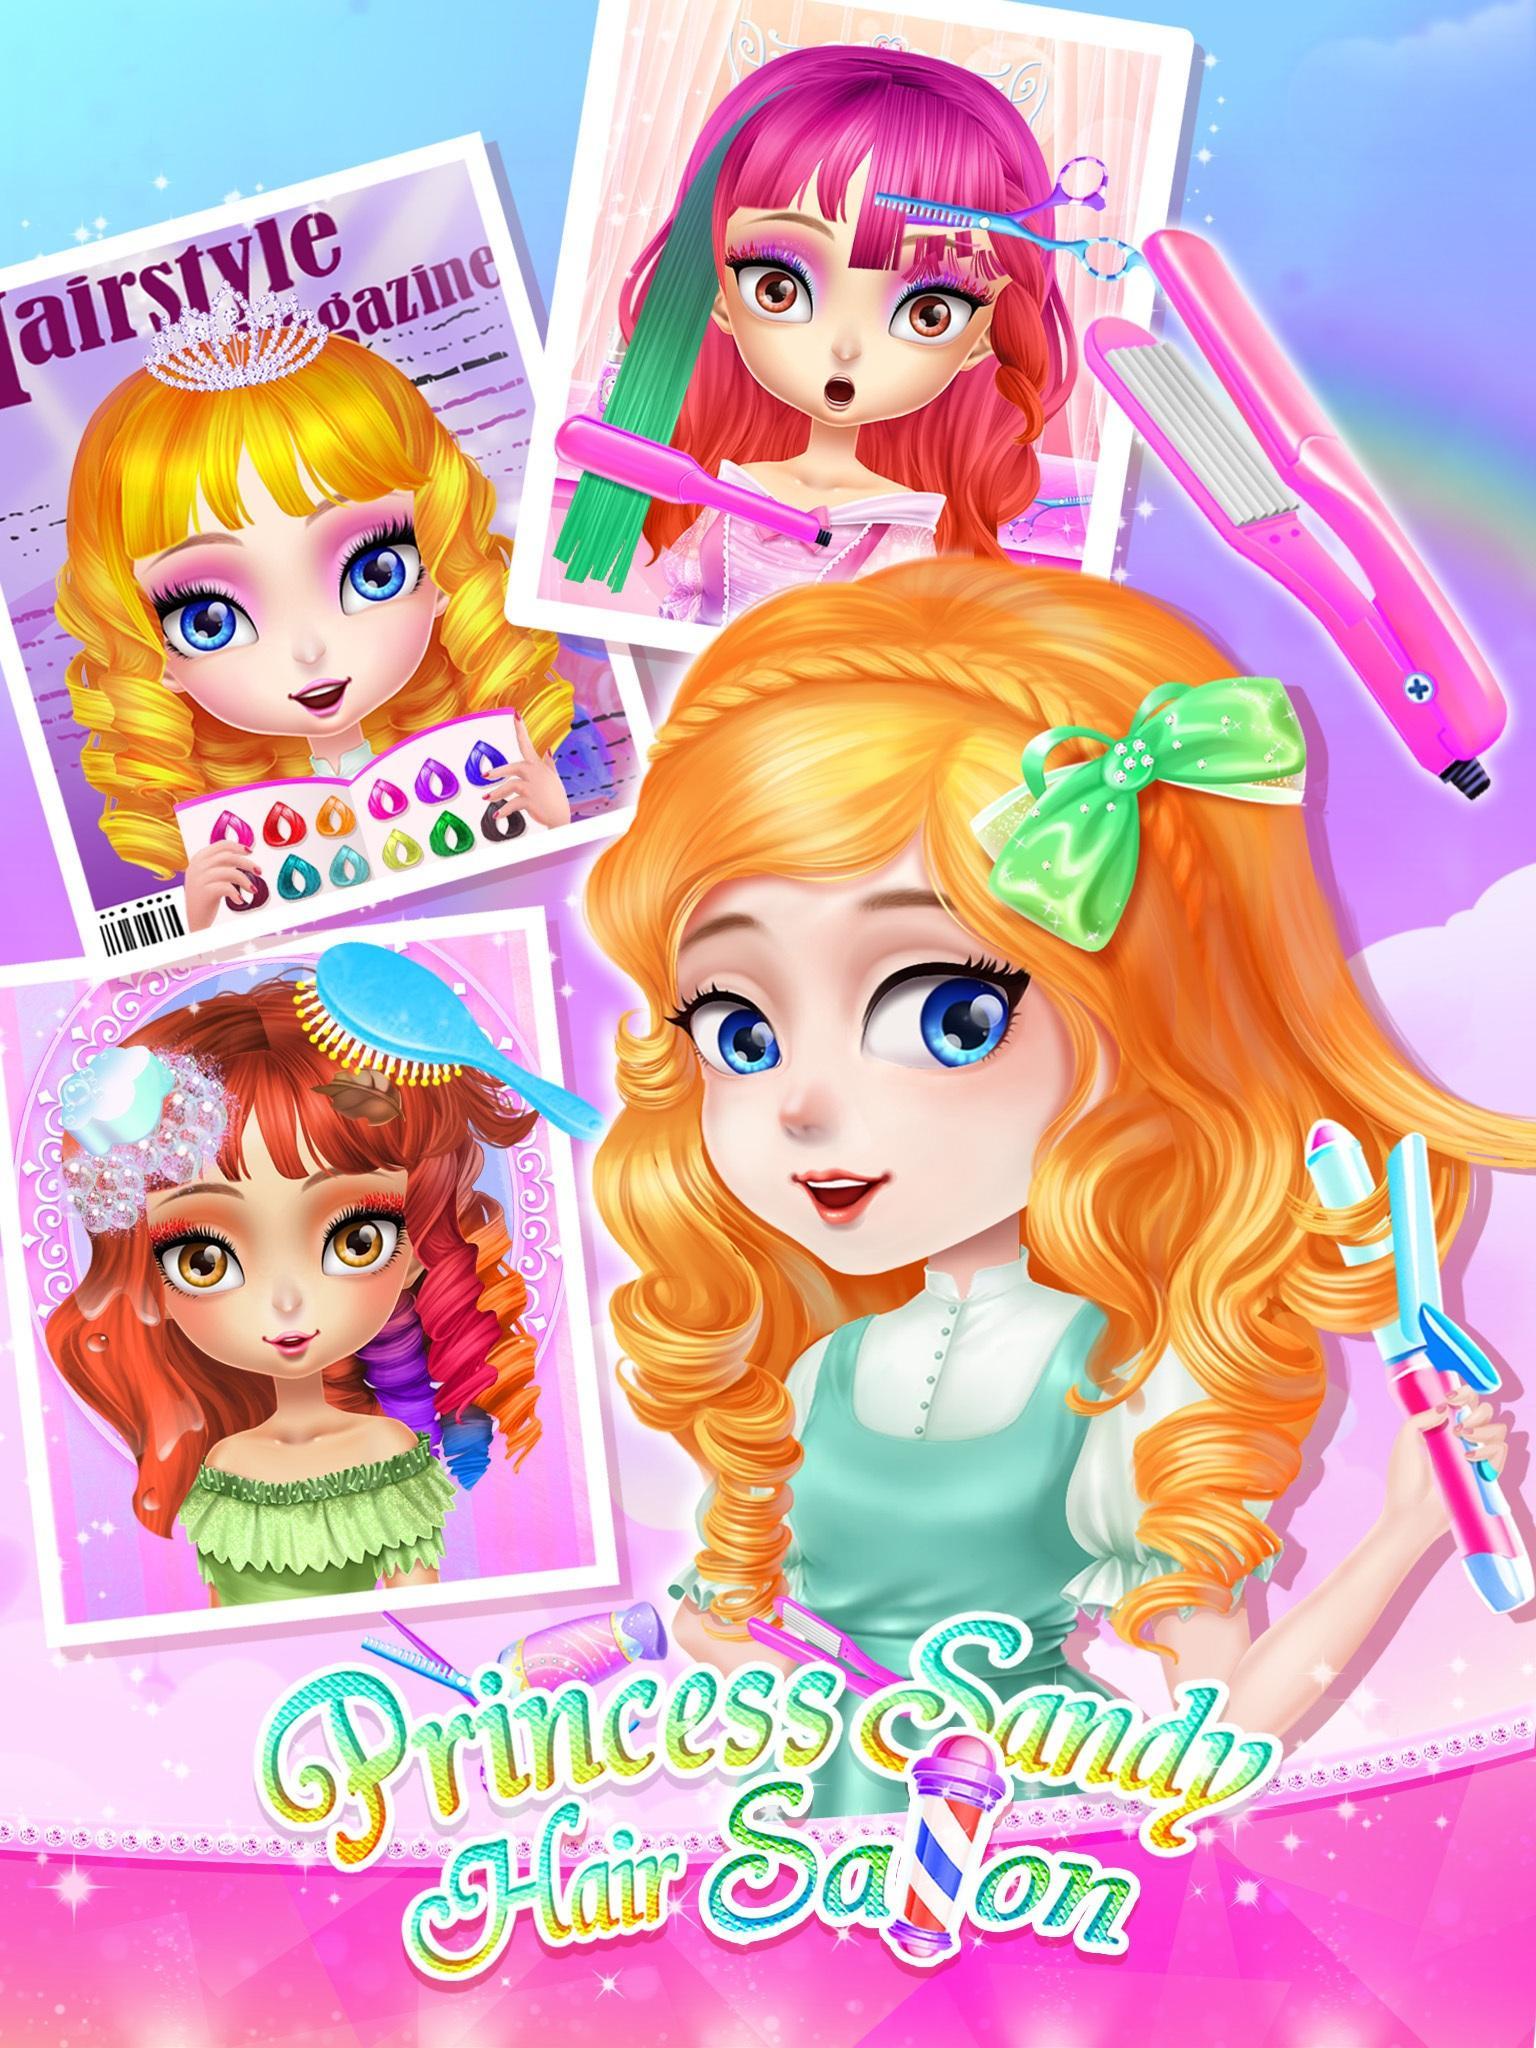 Screenshot 1 of Principessa Sandy-parrucchiere 1.0.3